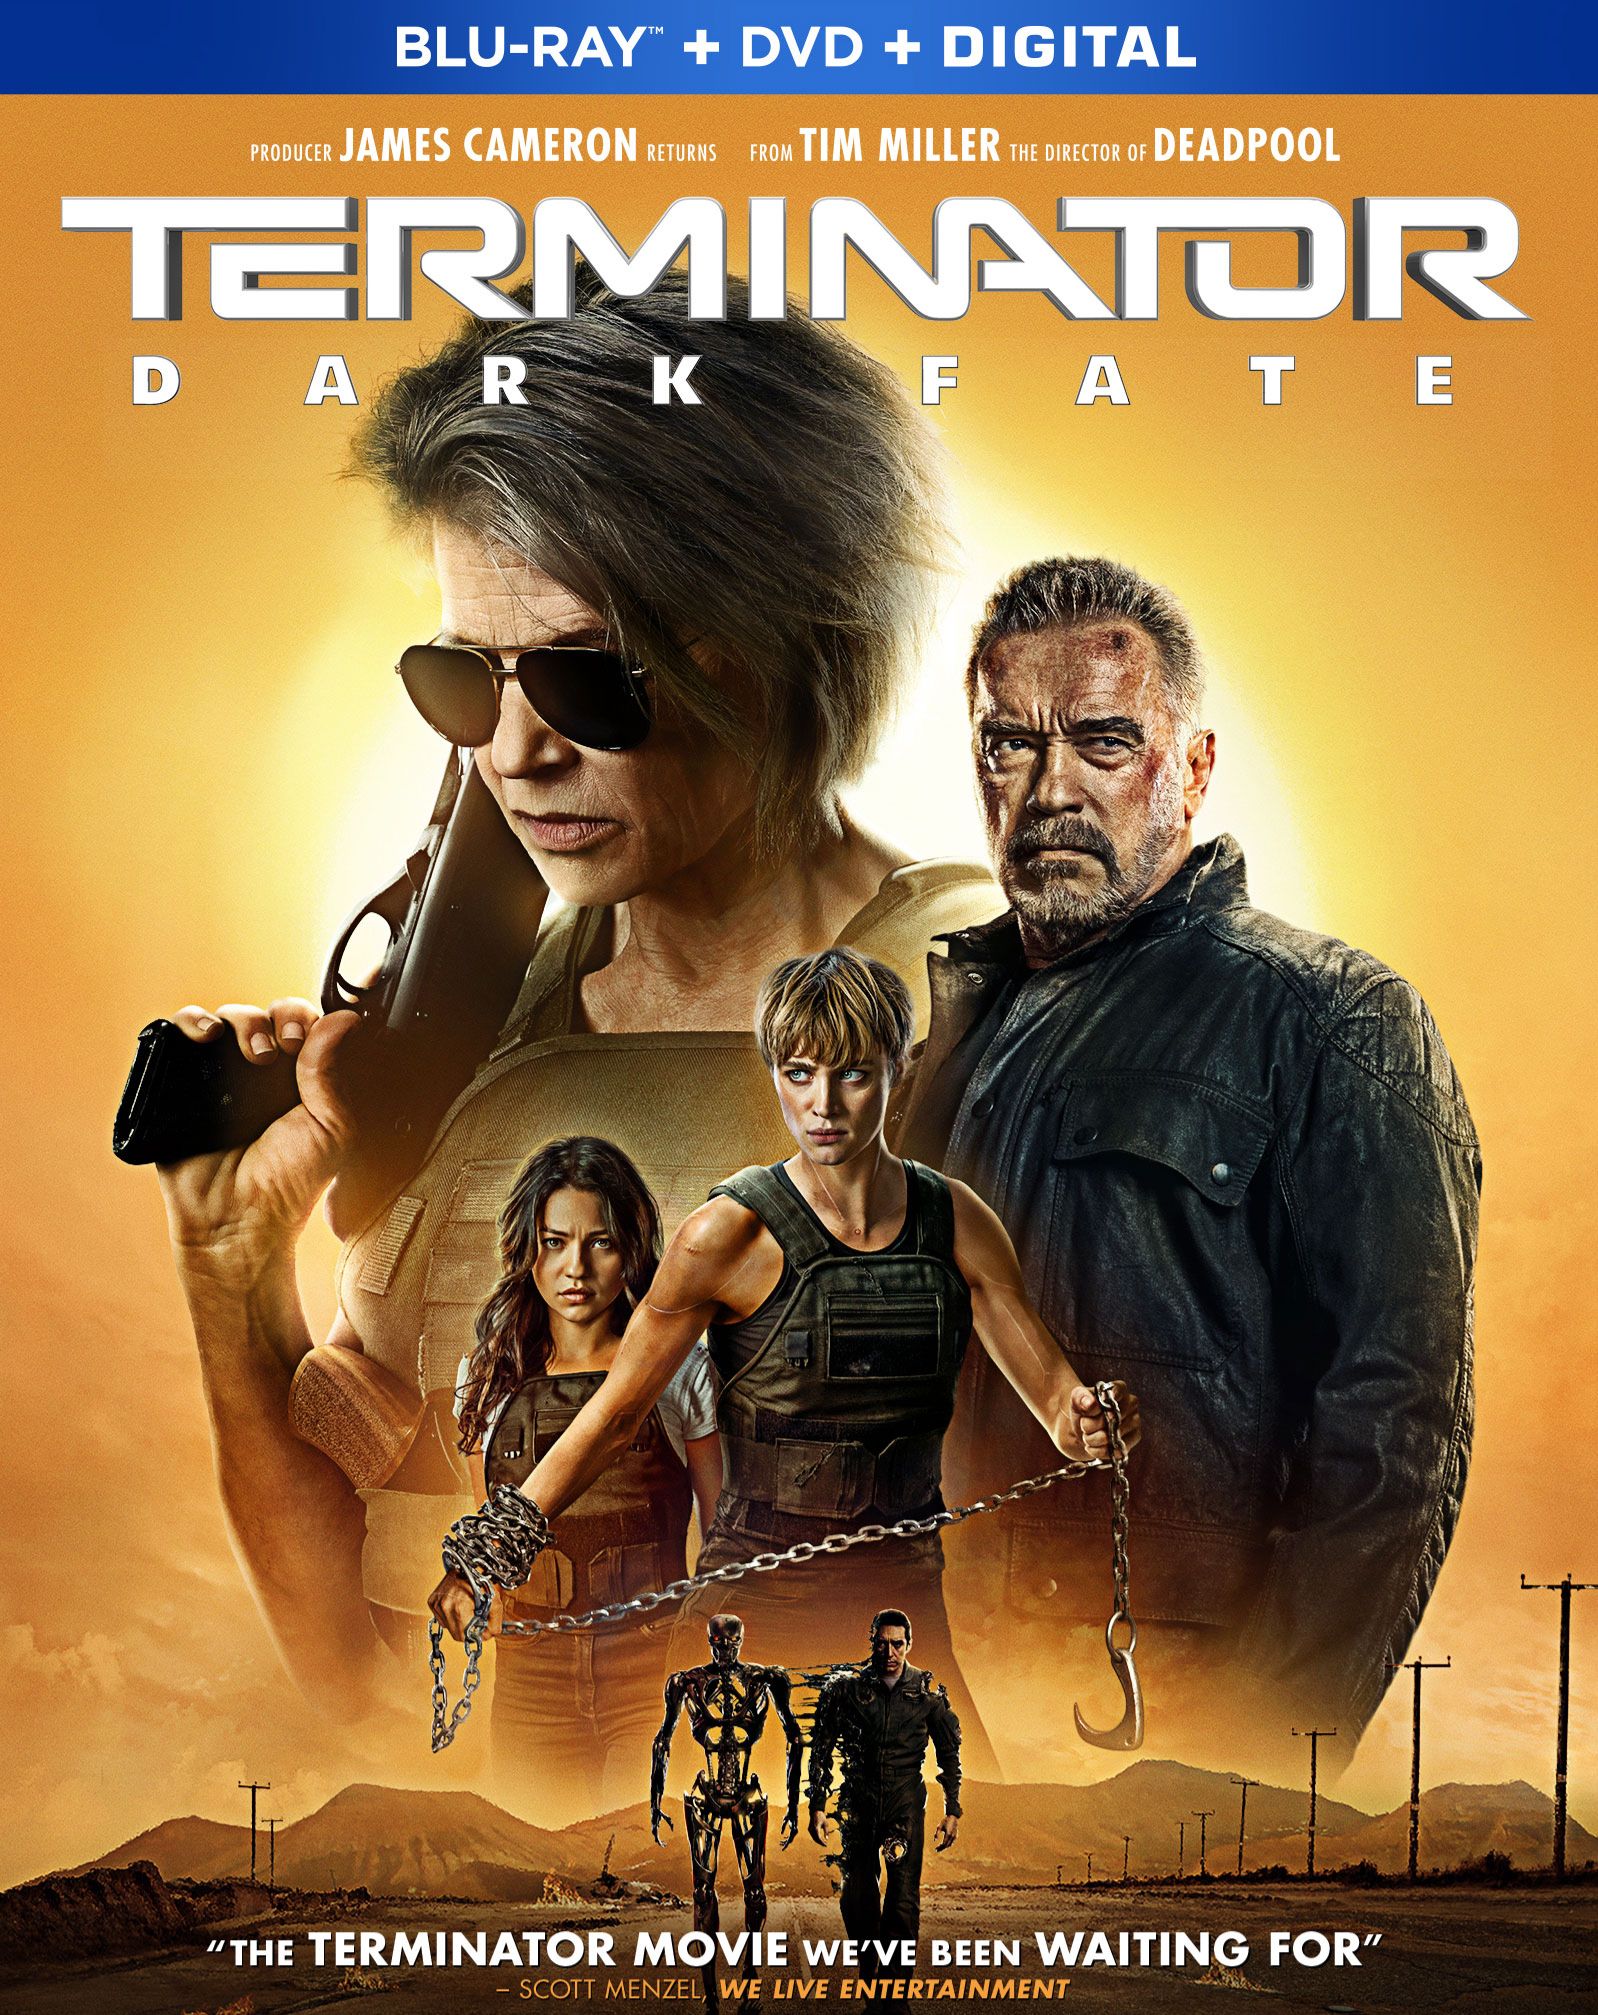 Terminator Dark Fate Blu-ray art